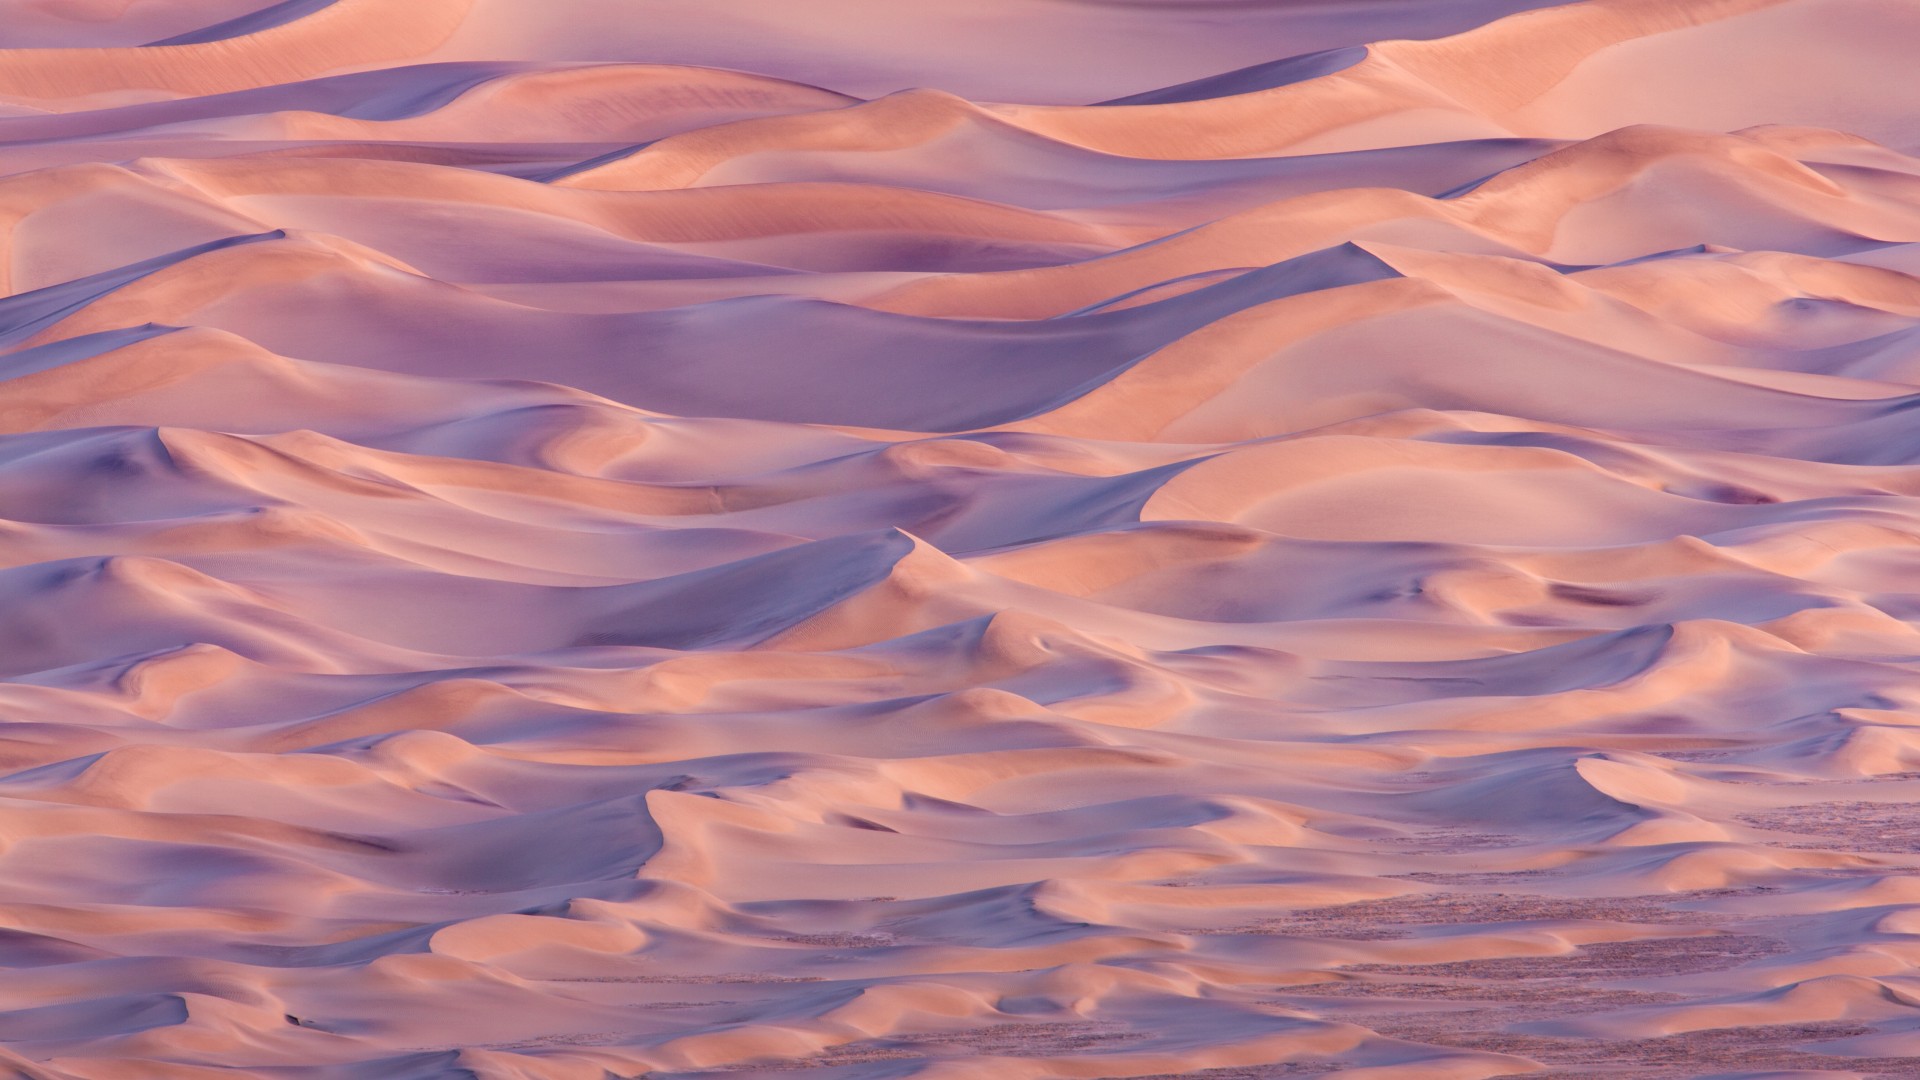 Обои Эпл, 5k, 4k, песок, пустыня, yosemite, 5k, 4k wallpaper, desert, sand, OSX, apple, sunset (horizontal)